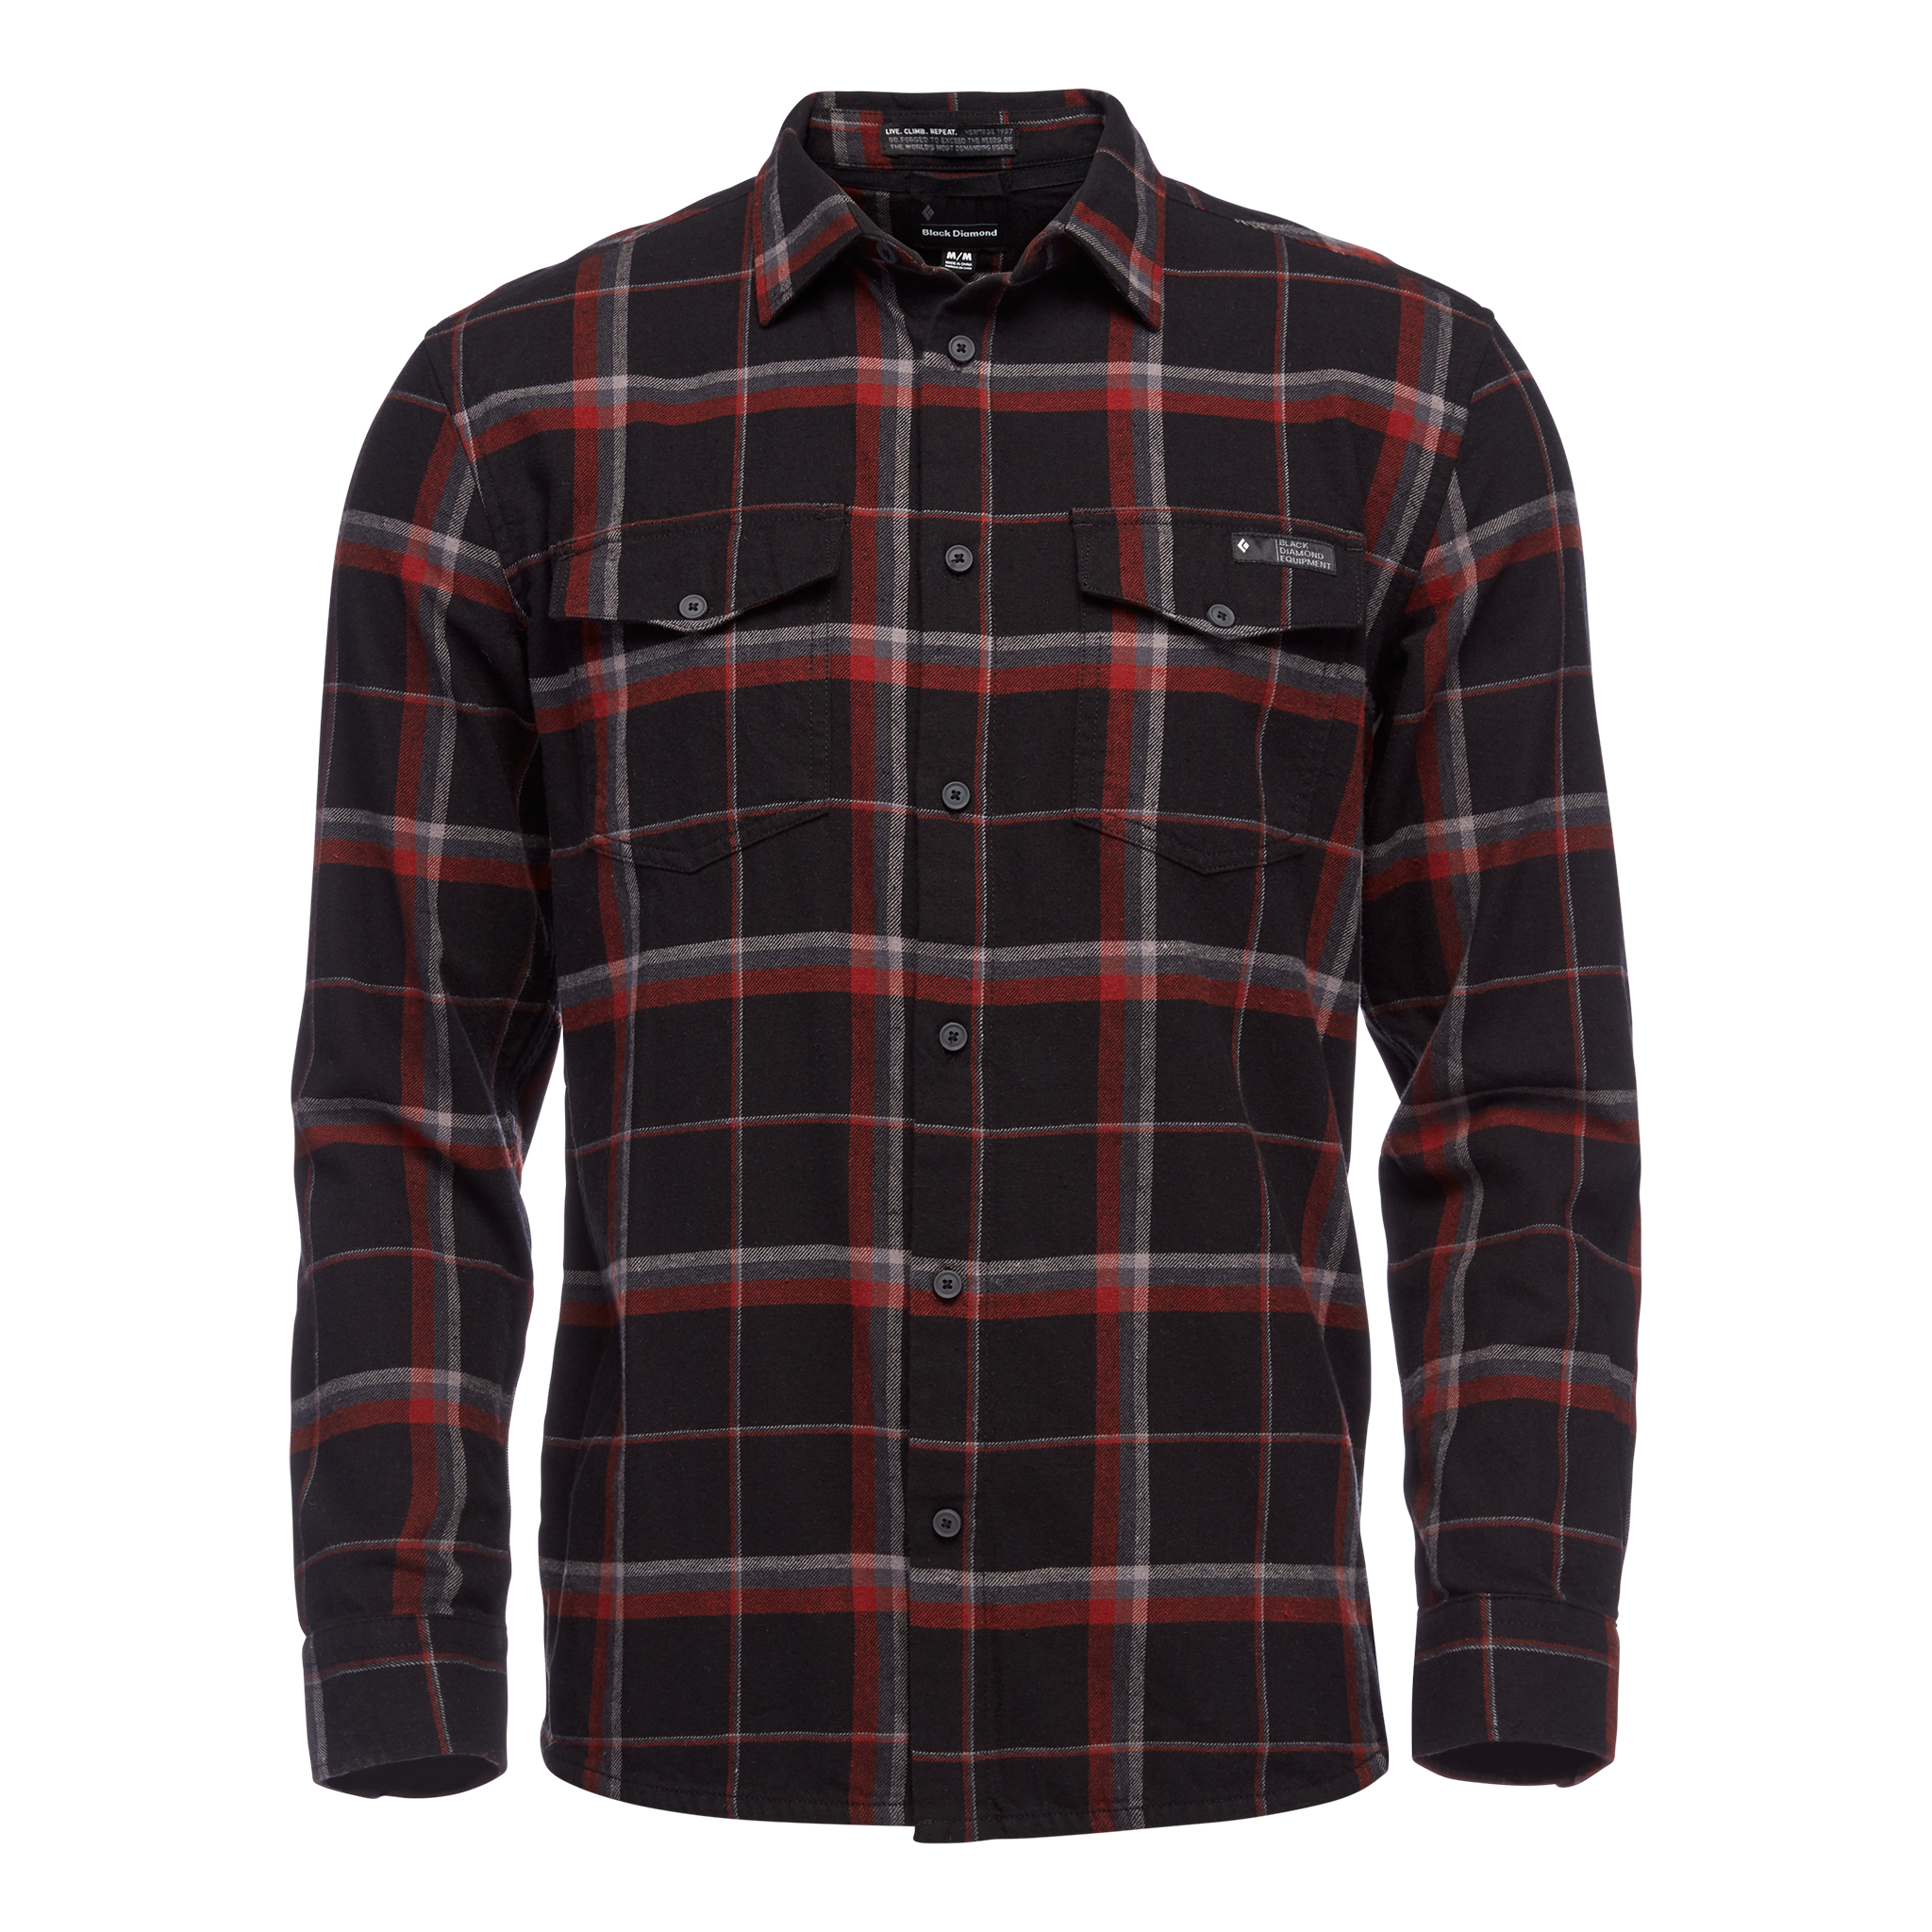 Black Diamond Equipment Men's Valley Flannel Shirt, Small Black/Nickel/Plaid